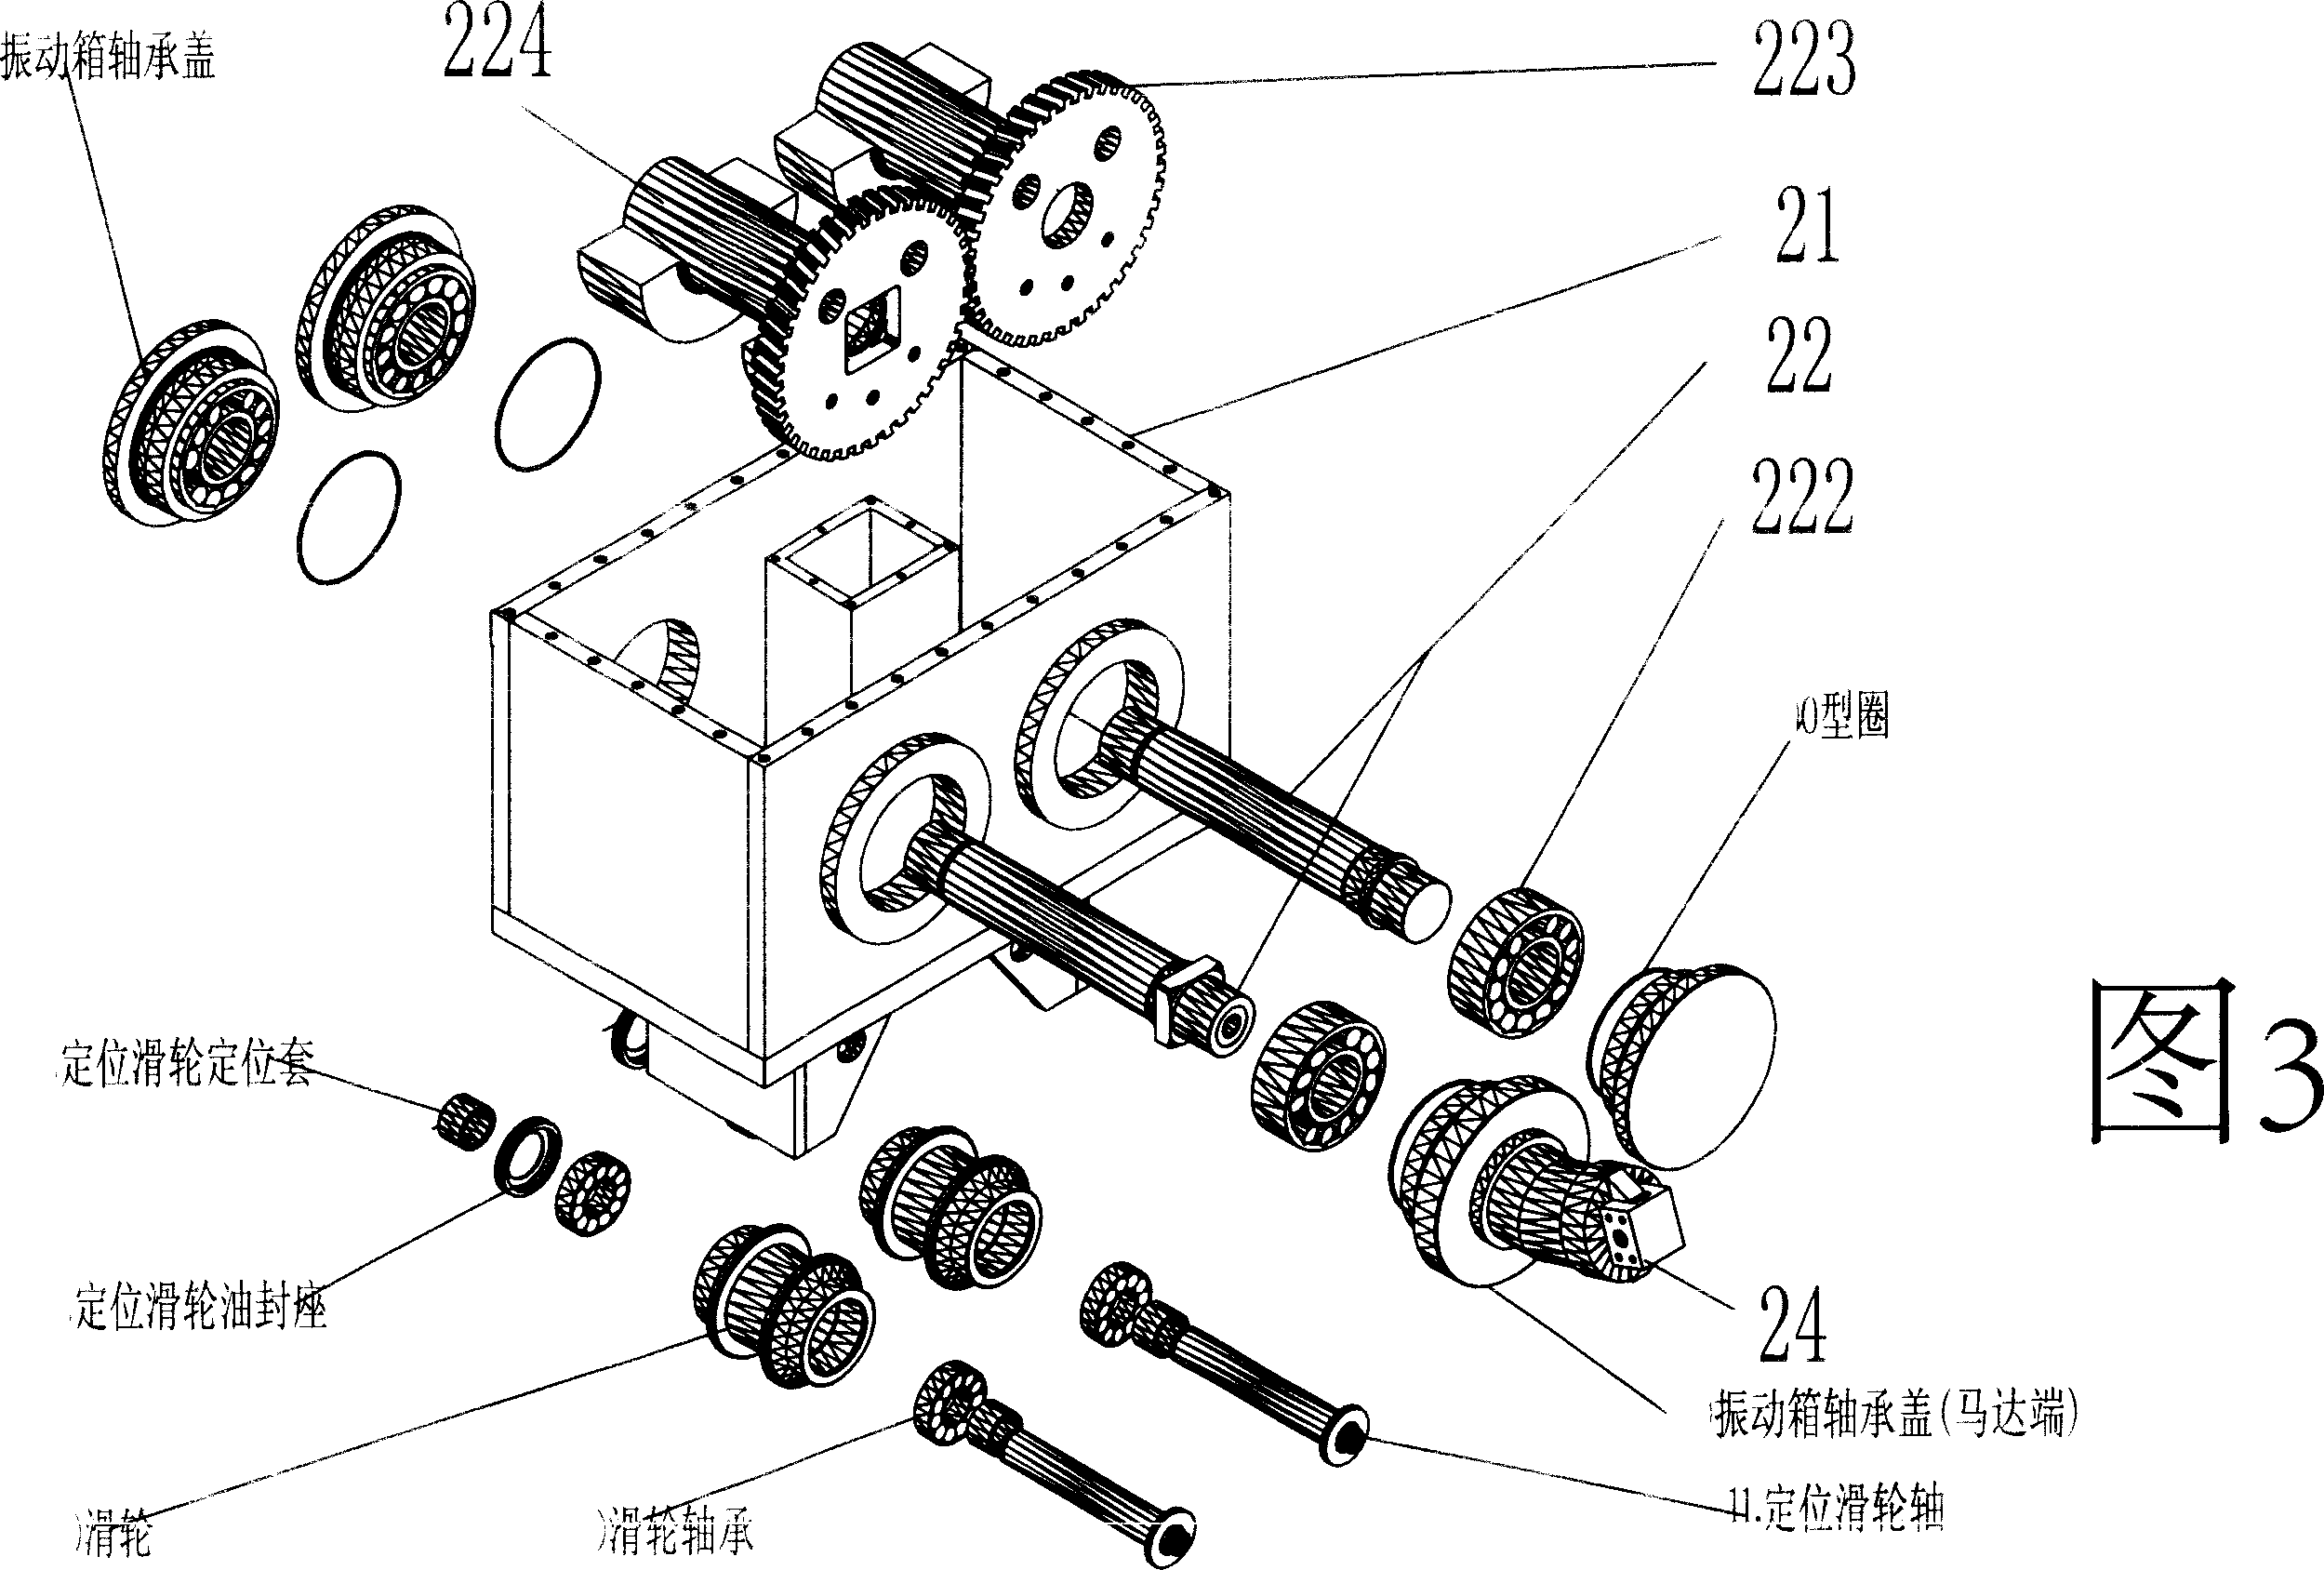 Bottom driving whole hydraulic plate-inserting machine